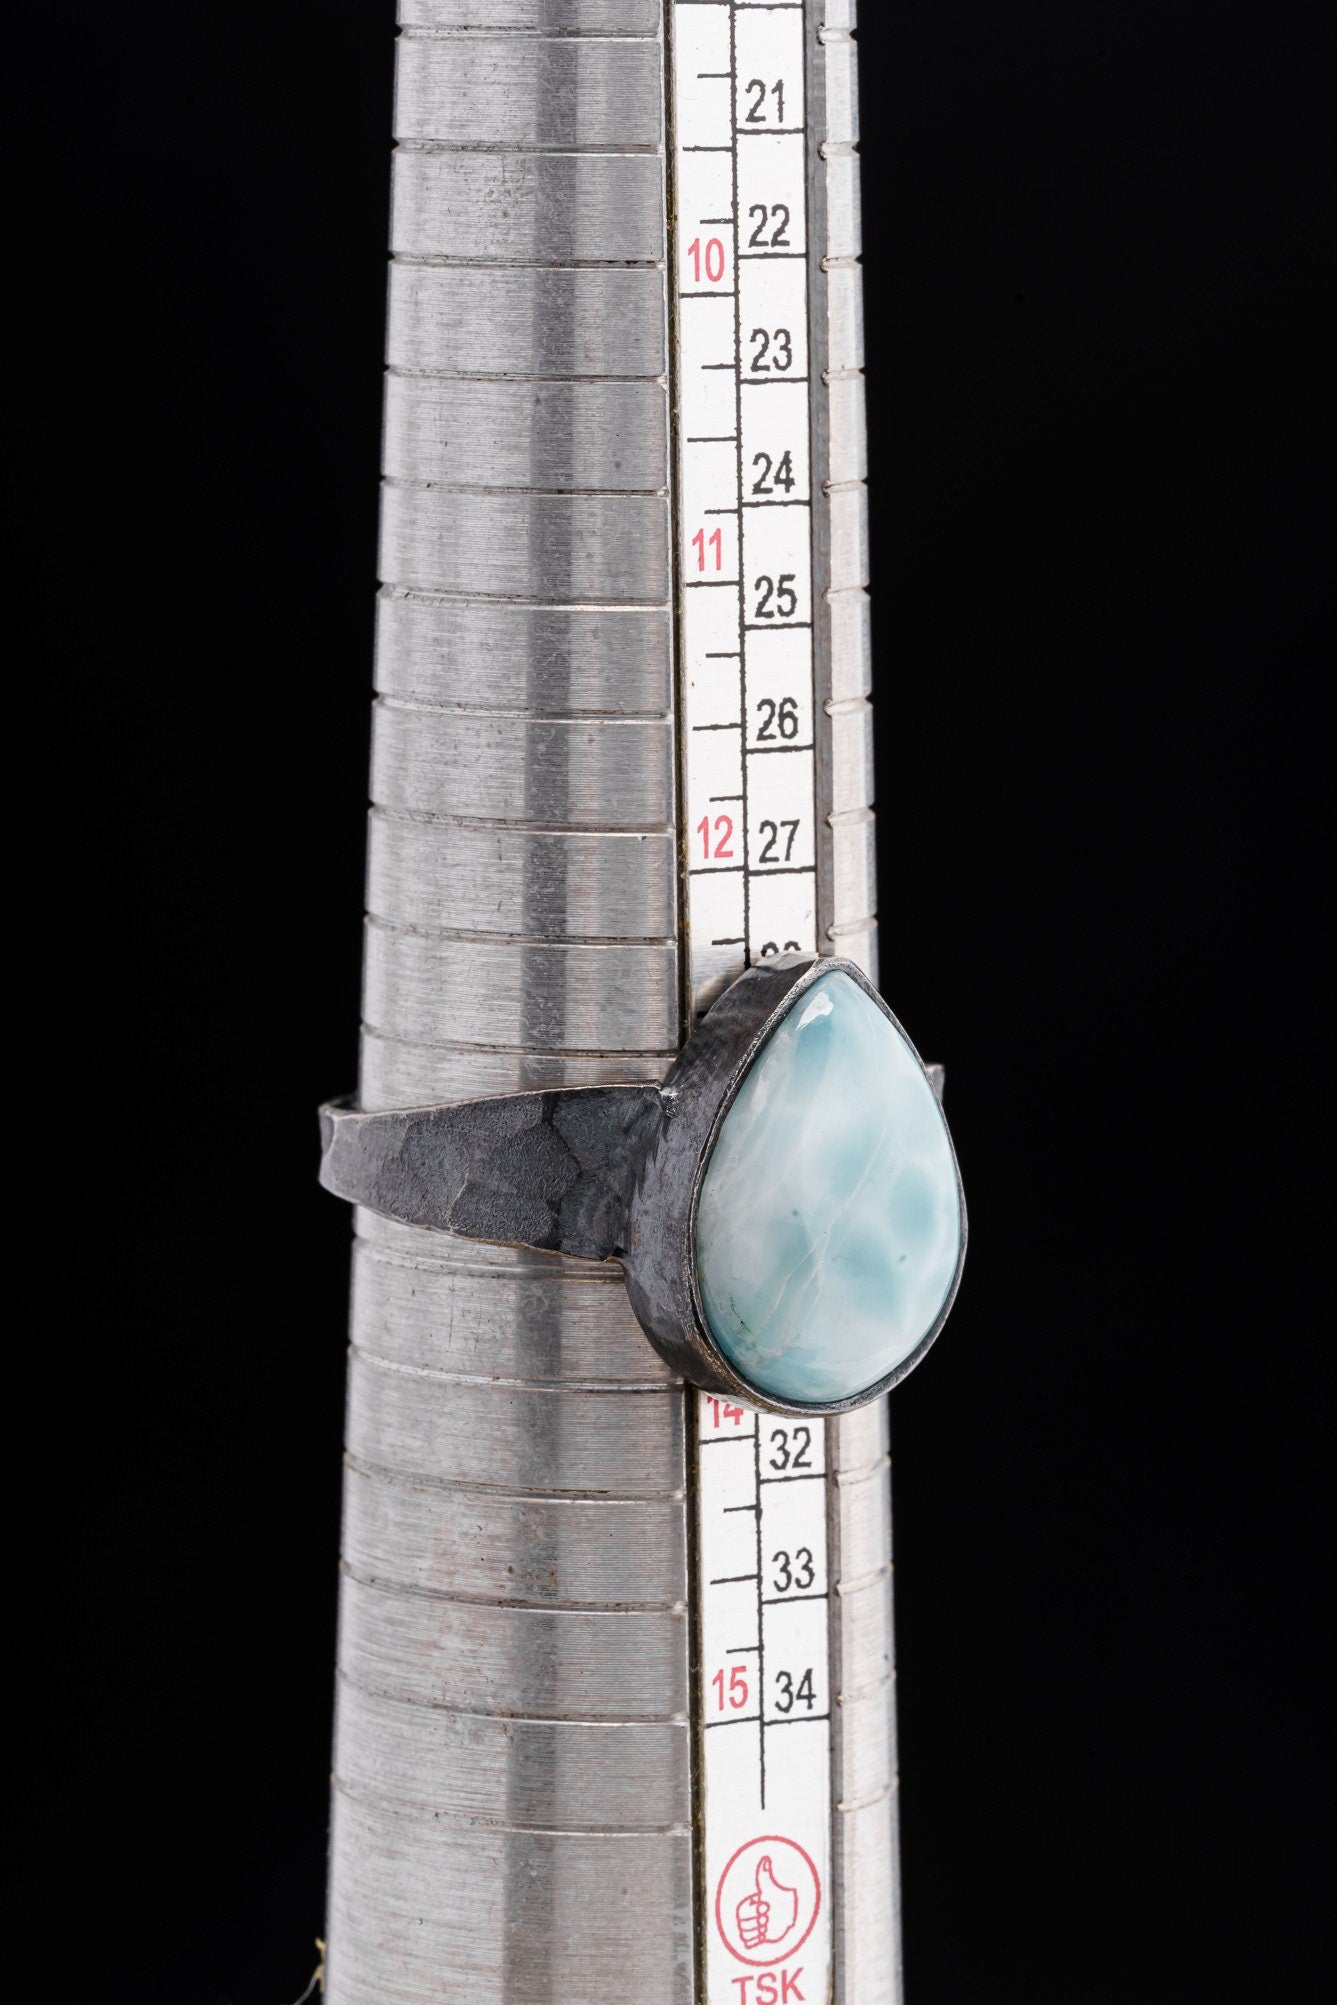 Tear Drop Larimar Cabochon - Men's/Unisex Large Crystal Ring - Size 12 US - 925 Sterling Silver - Hammer Textured & Oxidised